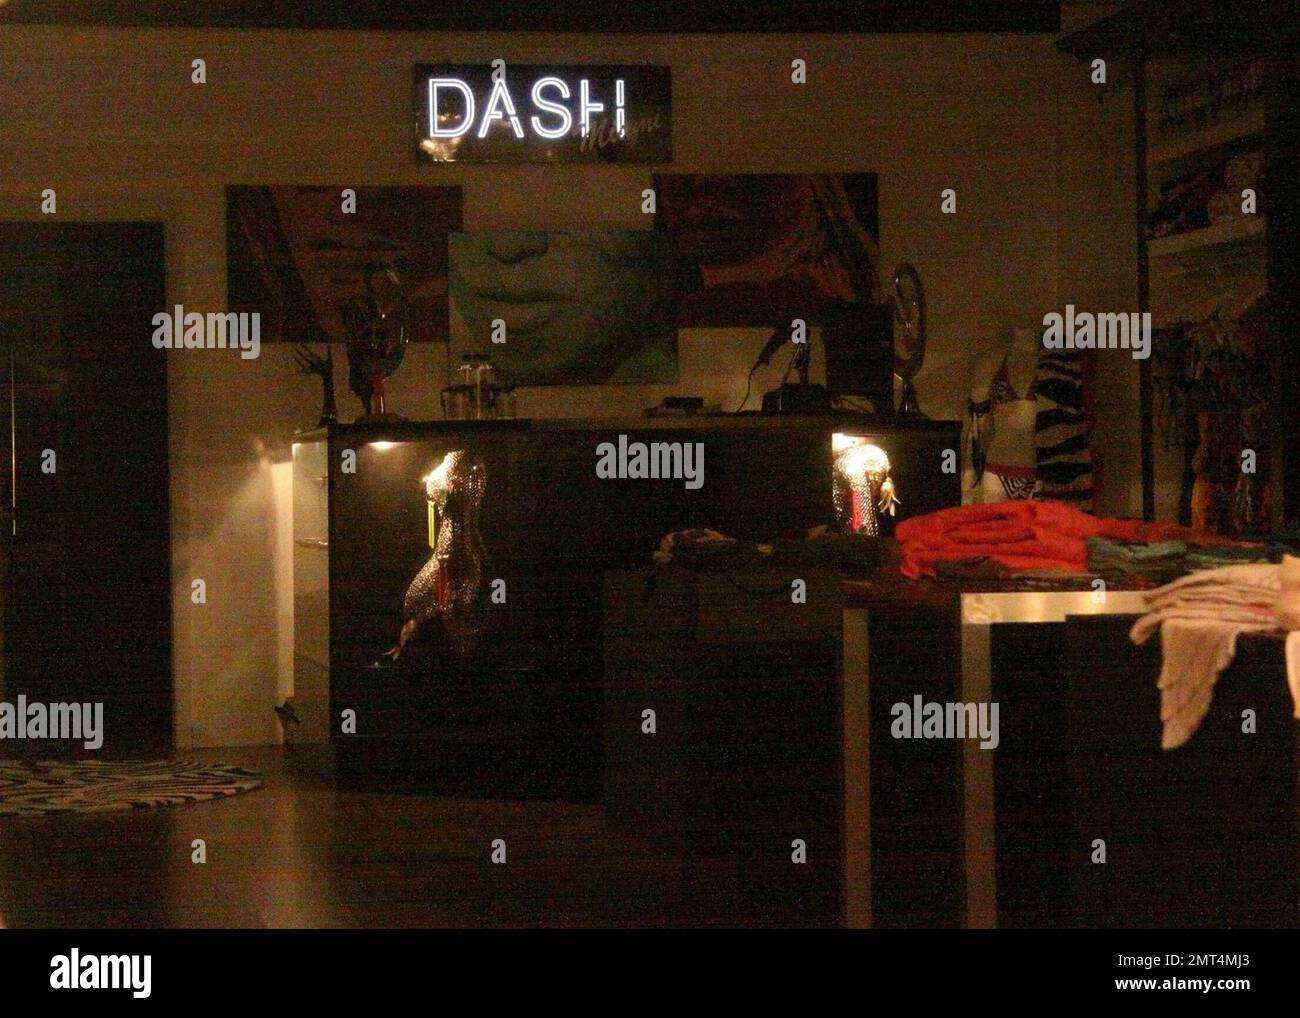 Does The DASH Store Still Exist? Kim, Khloe and Kourtney